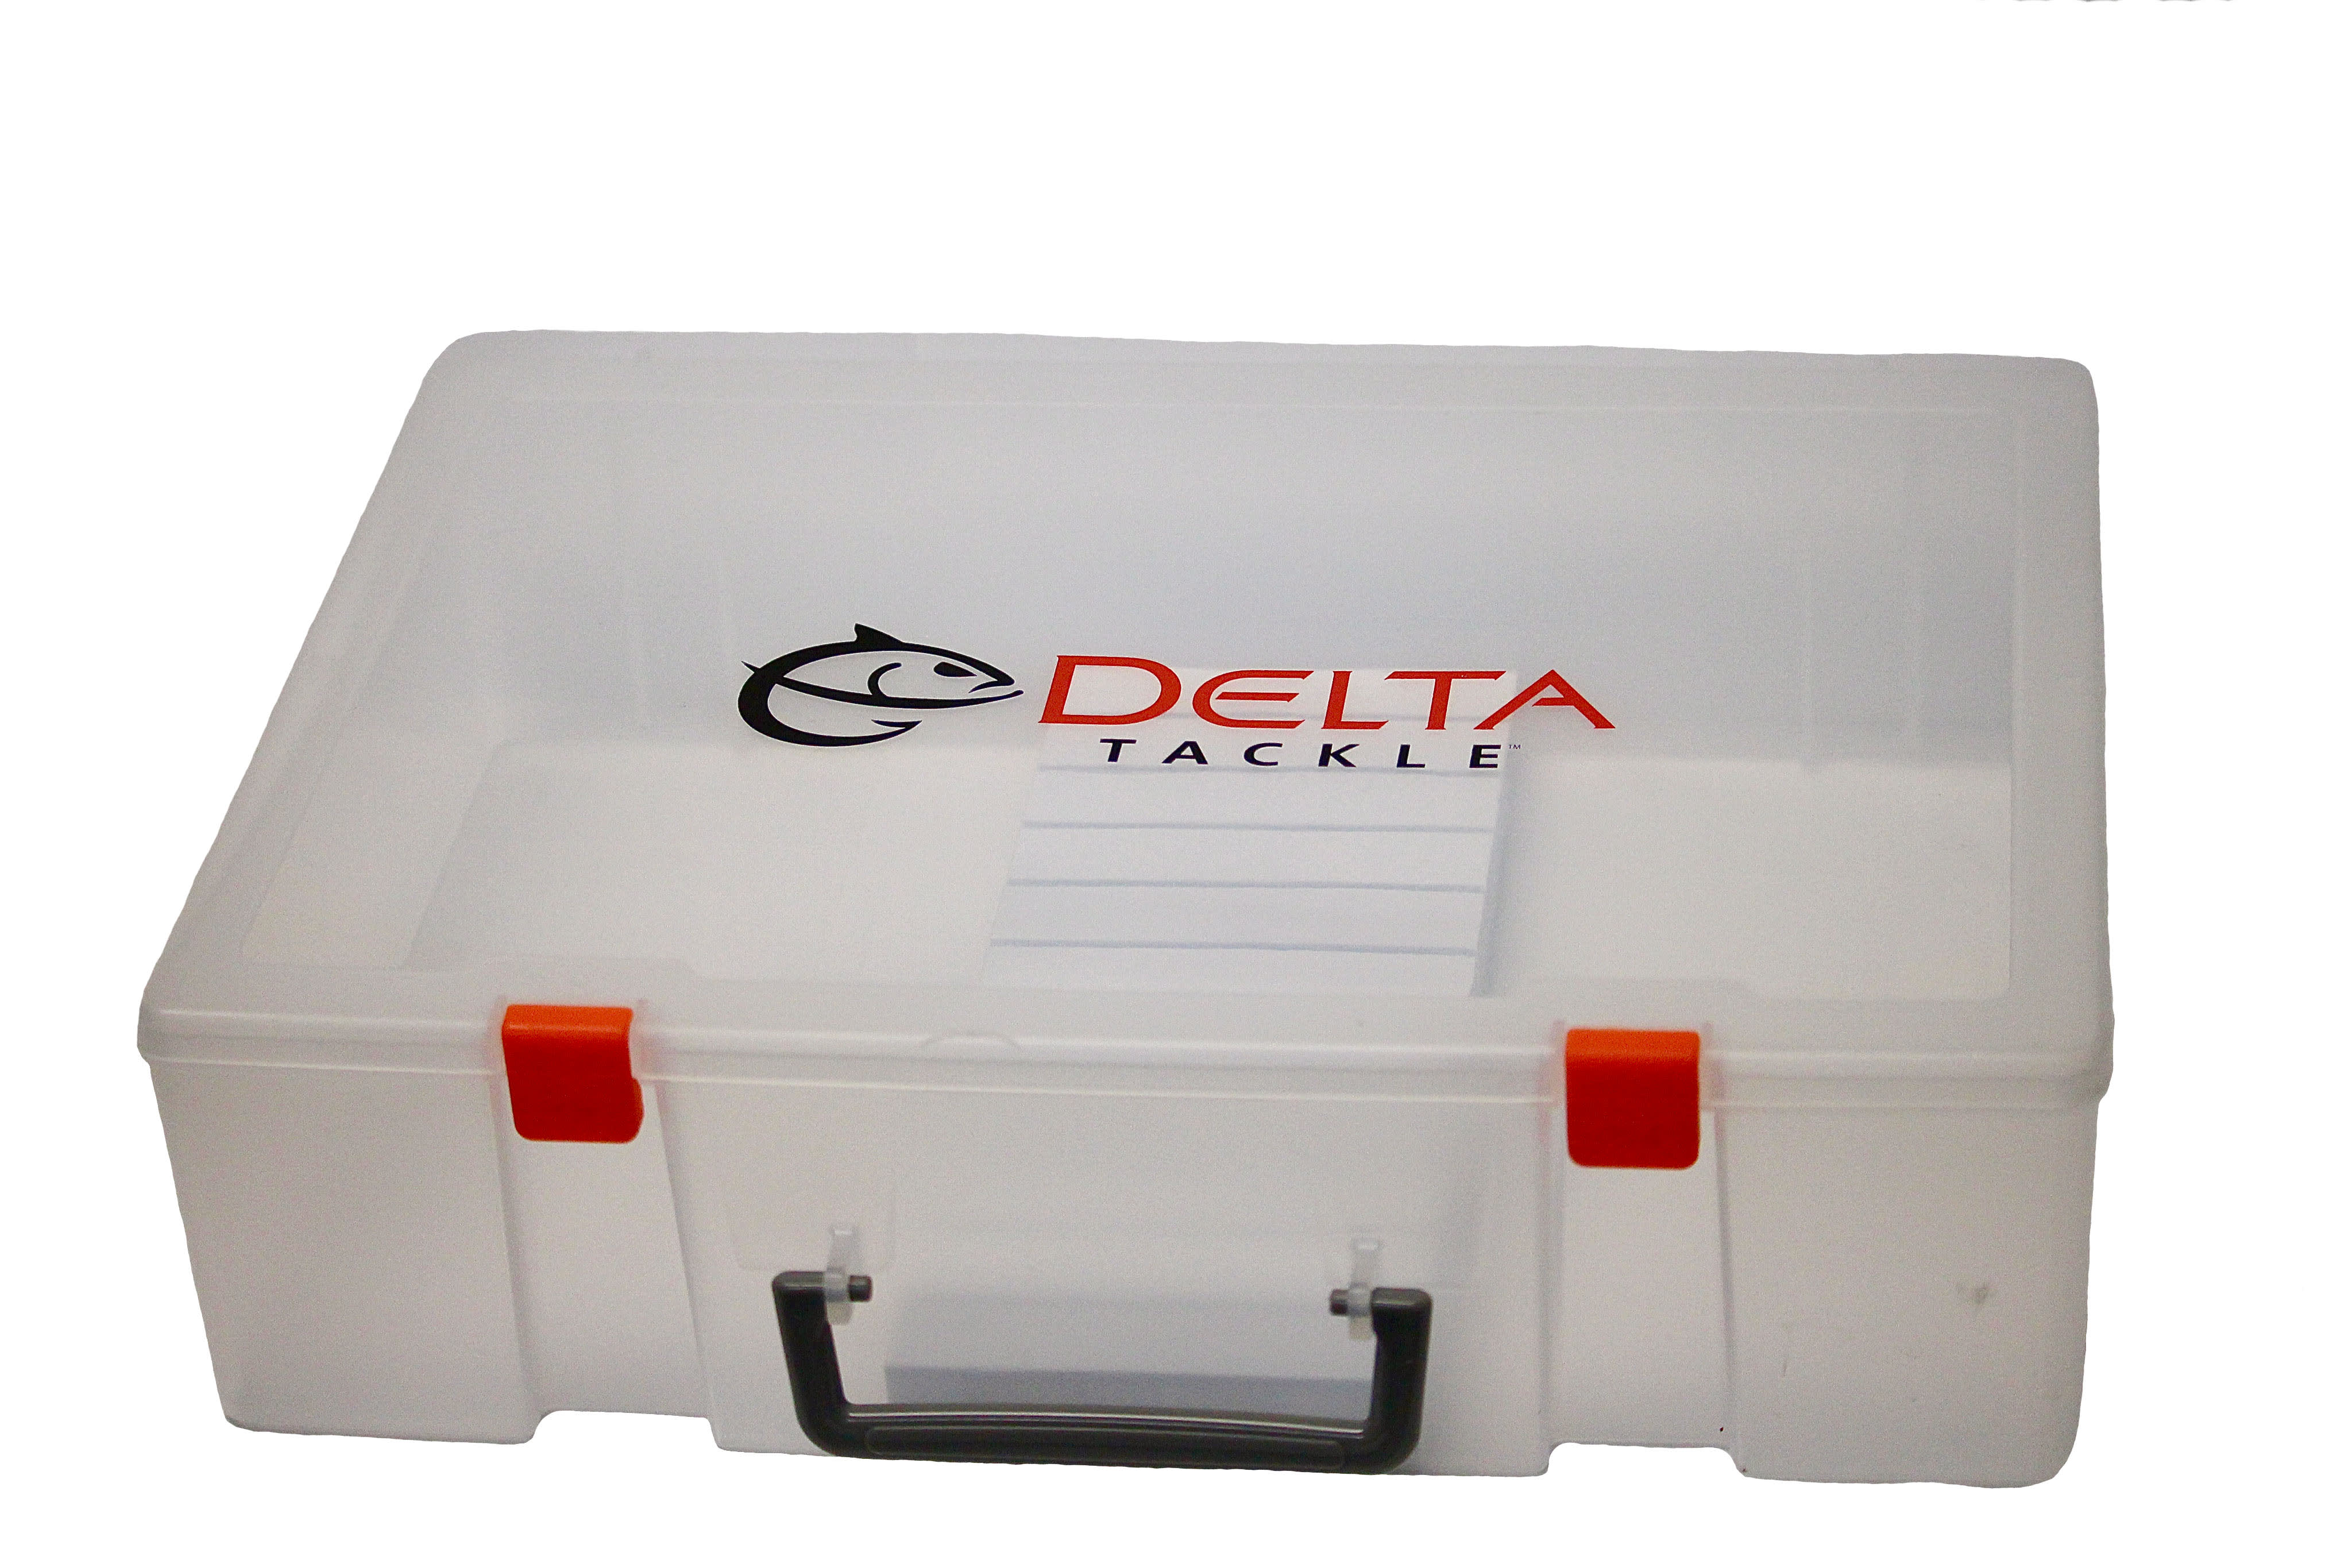 Delta Tackle Flasher Box